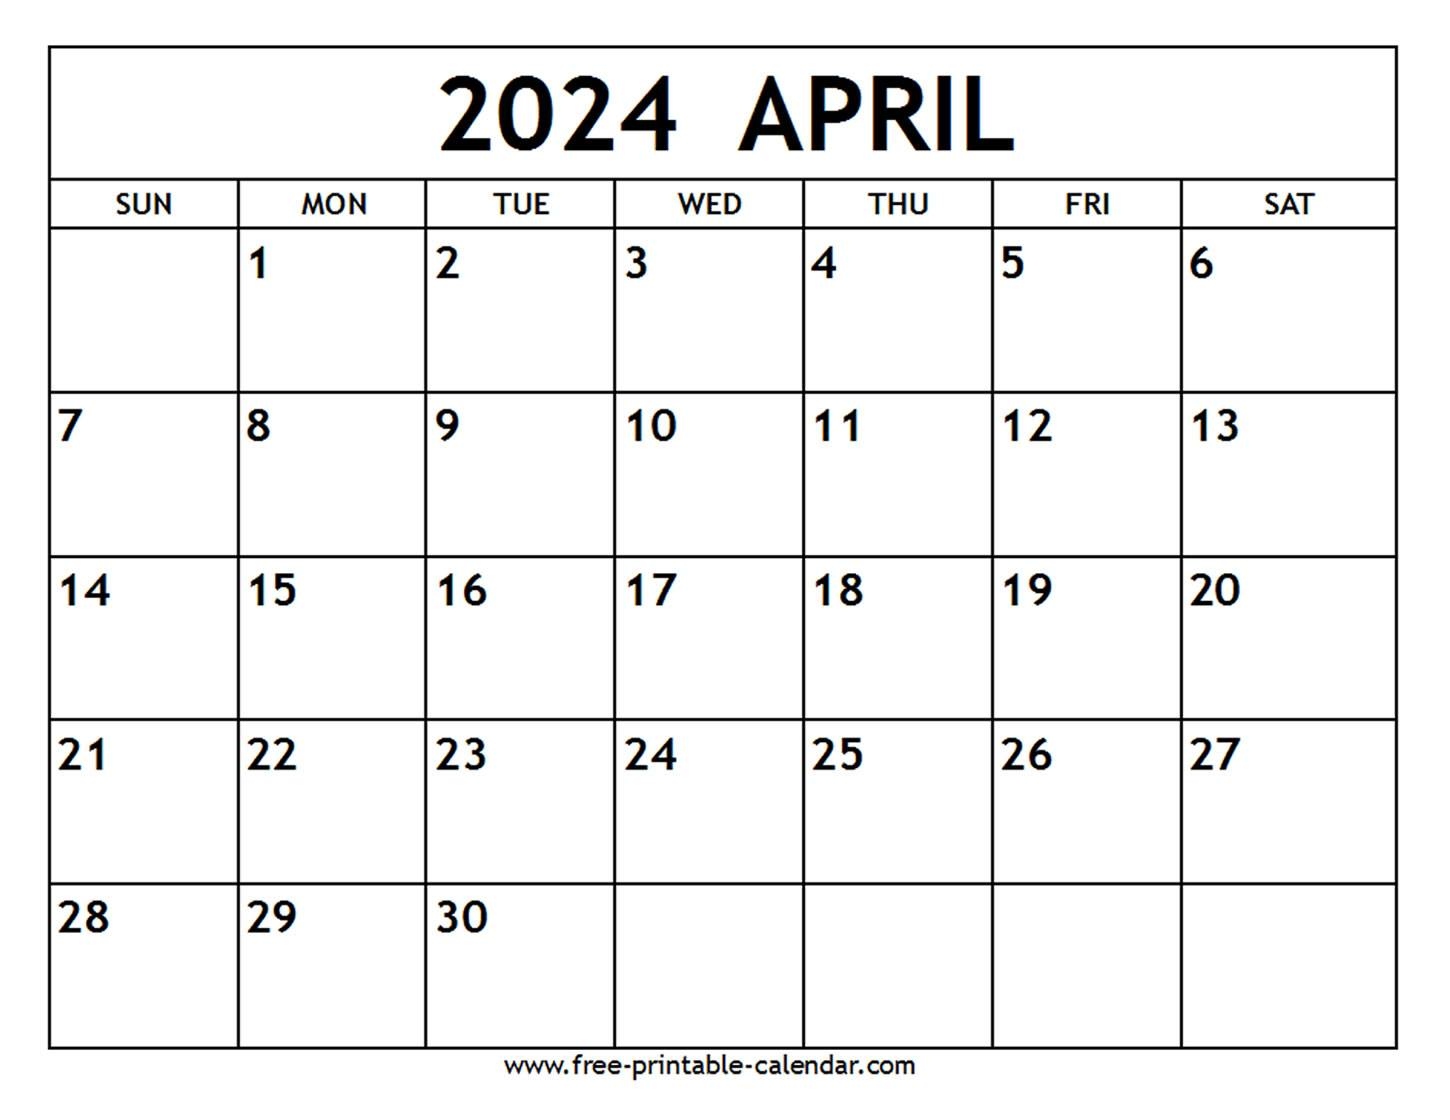 April 2024 Calendar - Free-Printable-Calendar with Free Printable Blank Calendar April 2024